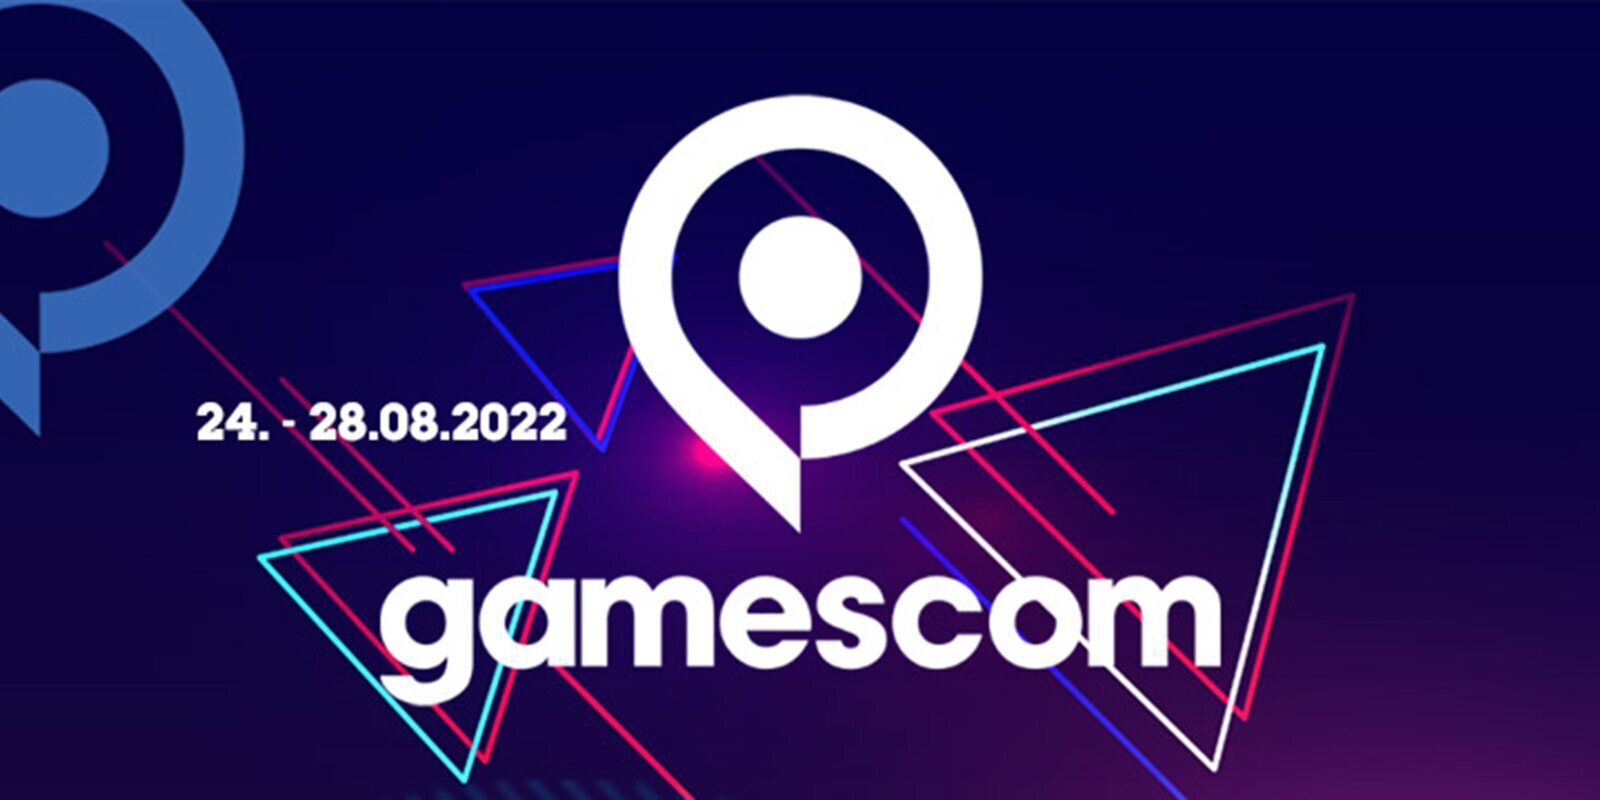 Ya se ha establecido la fecha de Gamescom 2022